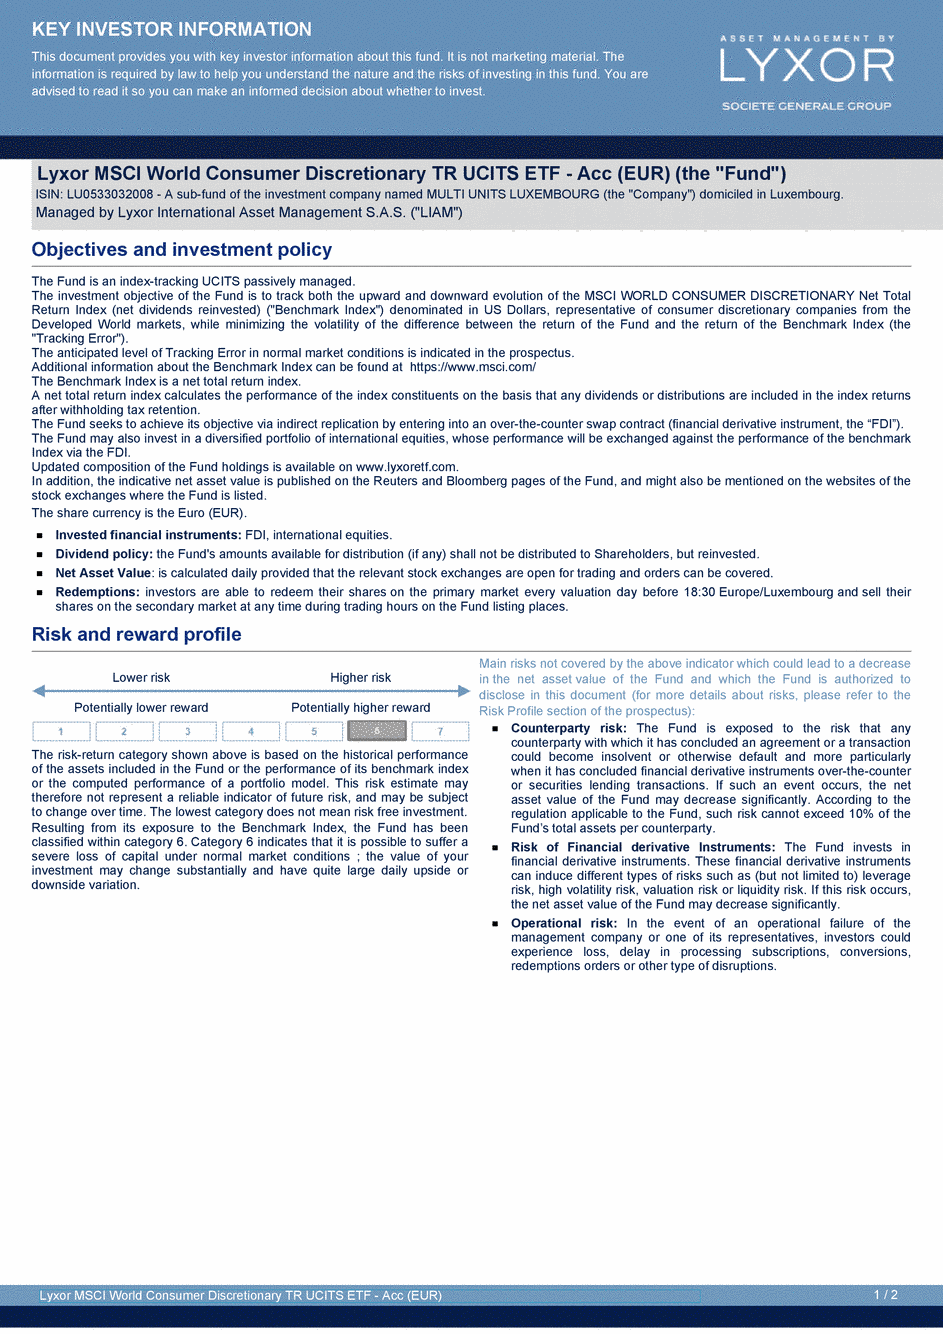 DICI Lyxor MSCI World Consumer Discretionary TR UCITS ETF - Acc (EUR) - 19/02/2021 - Anglais